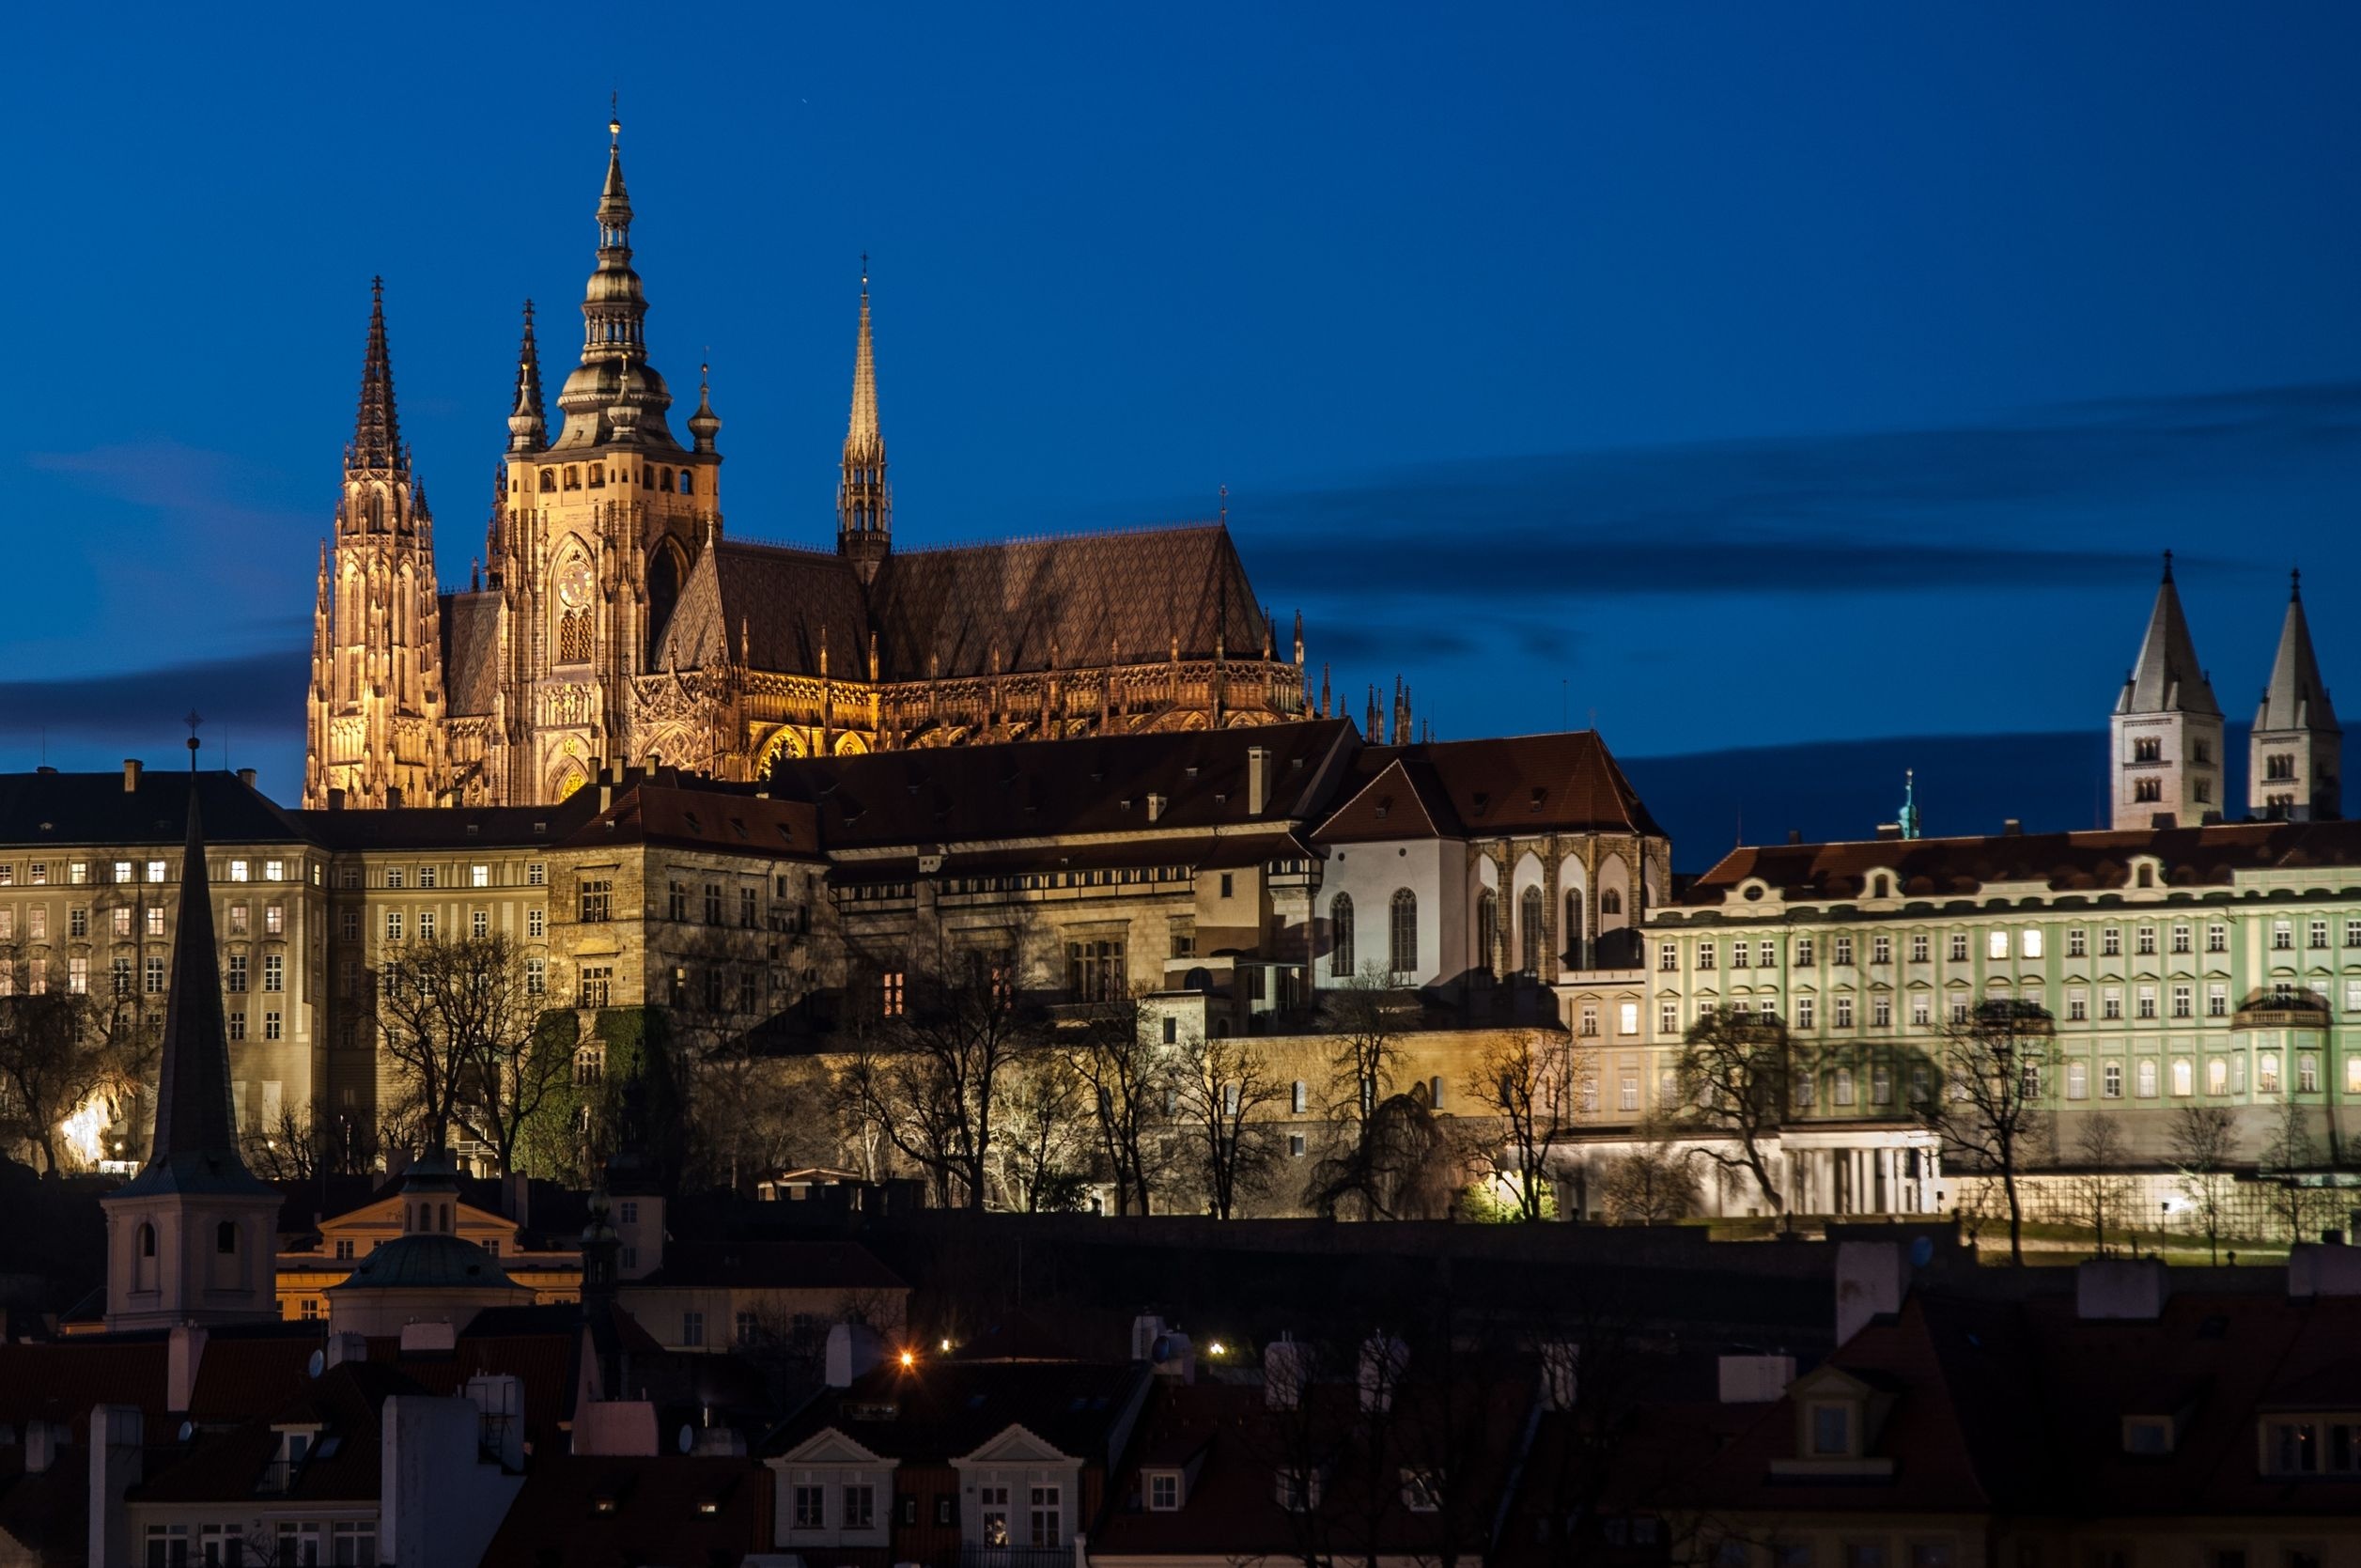 Prague Castle, Man-made wonder, High-quality pictures, 2019 wallpapers, 2520x1670 HD Desktop